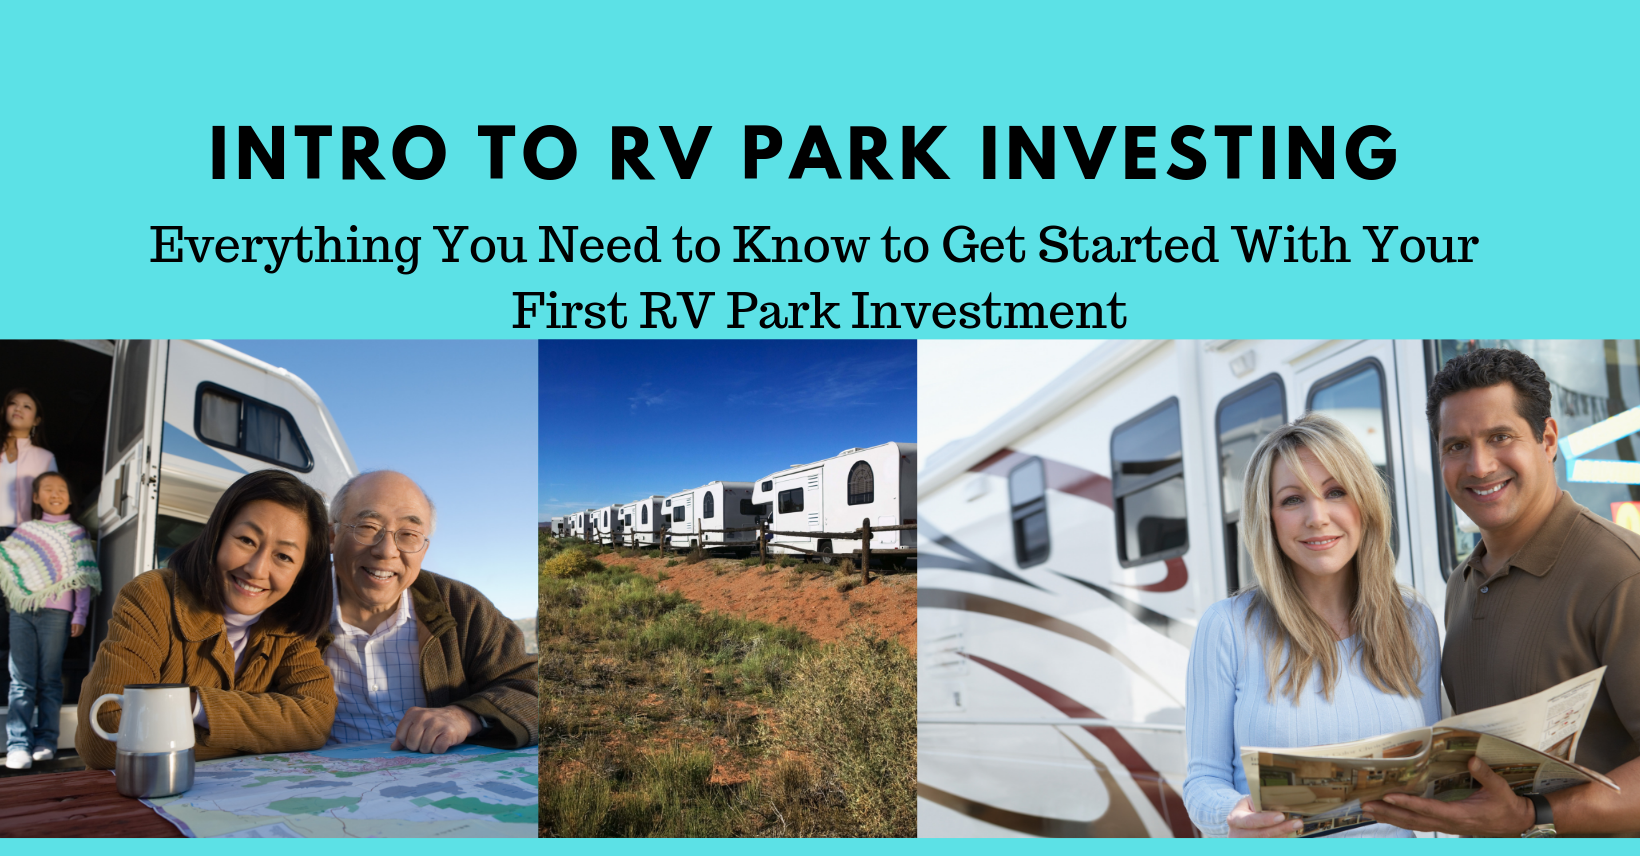 RV Park investing course